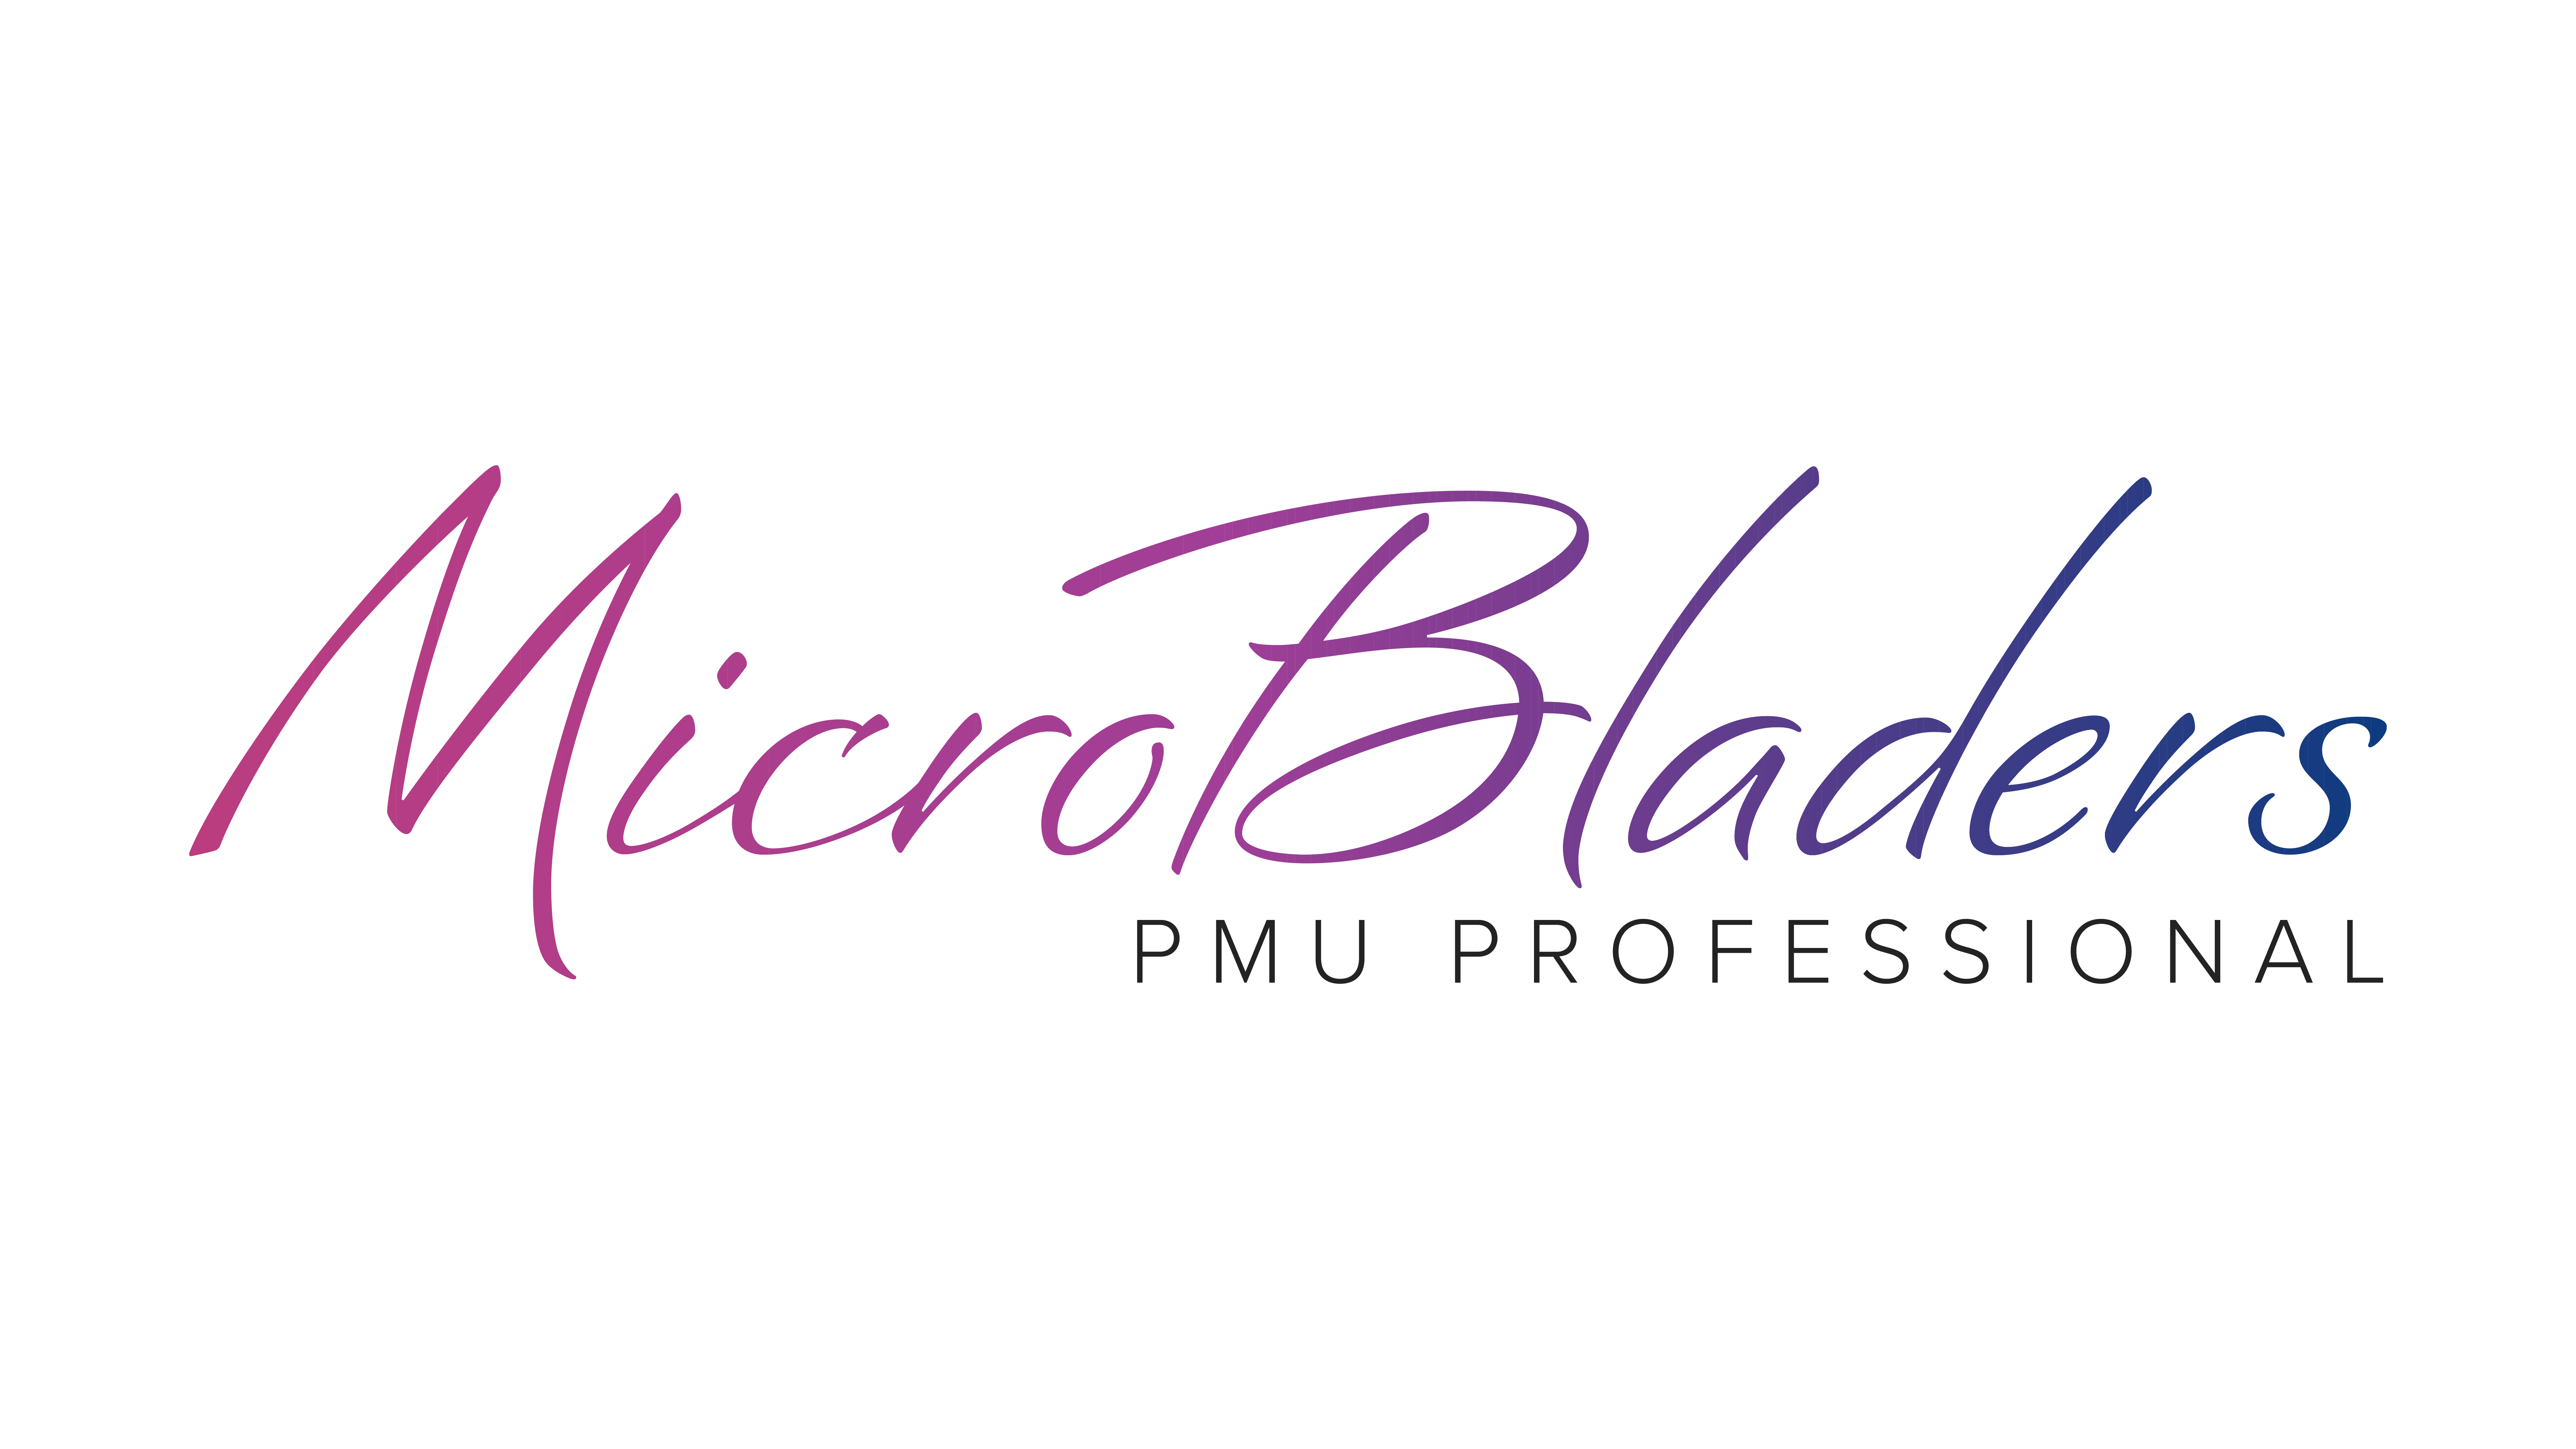 MicroBladers PMU Professional logo